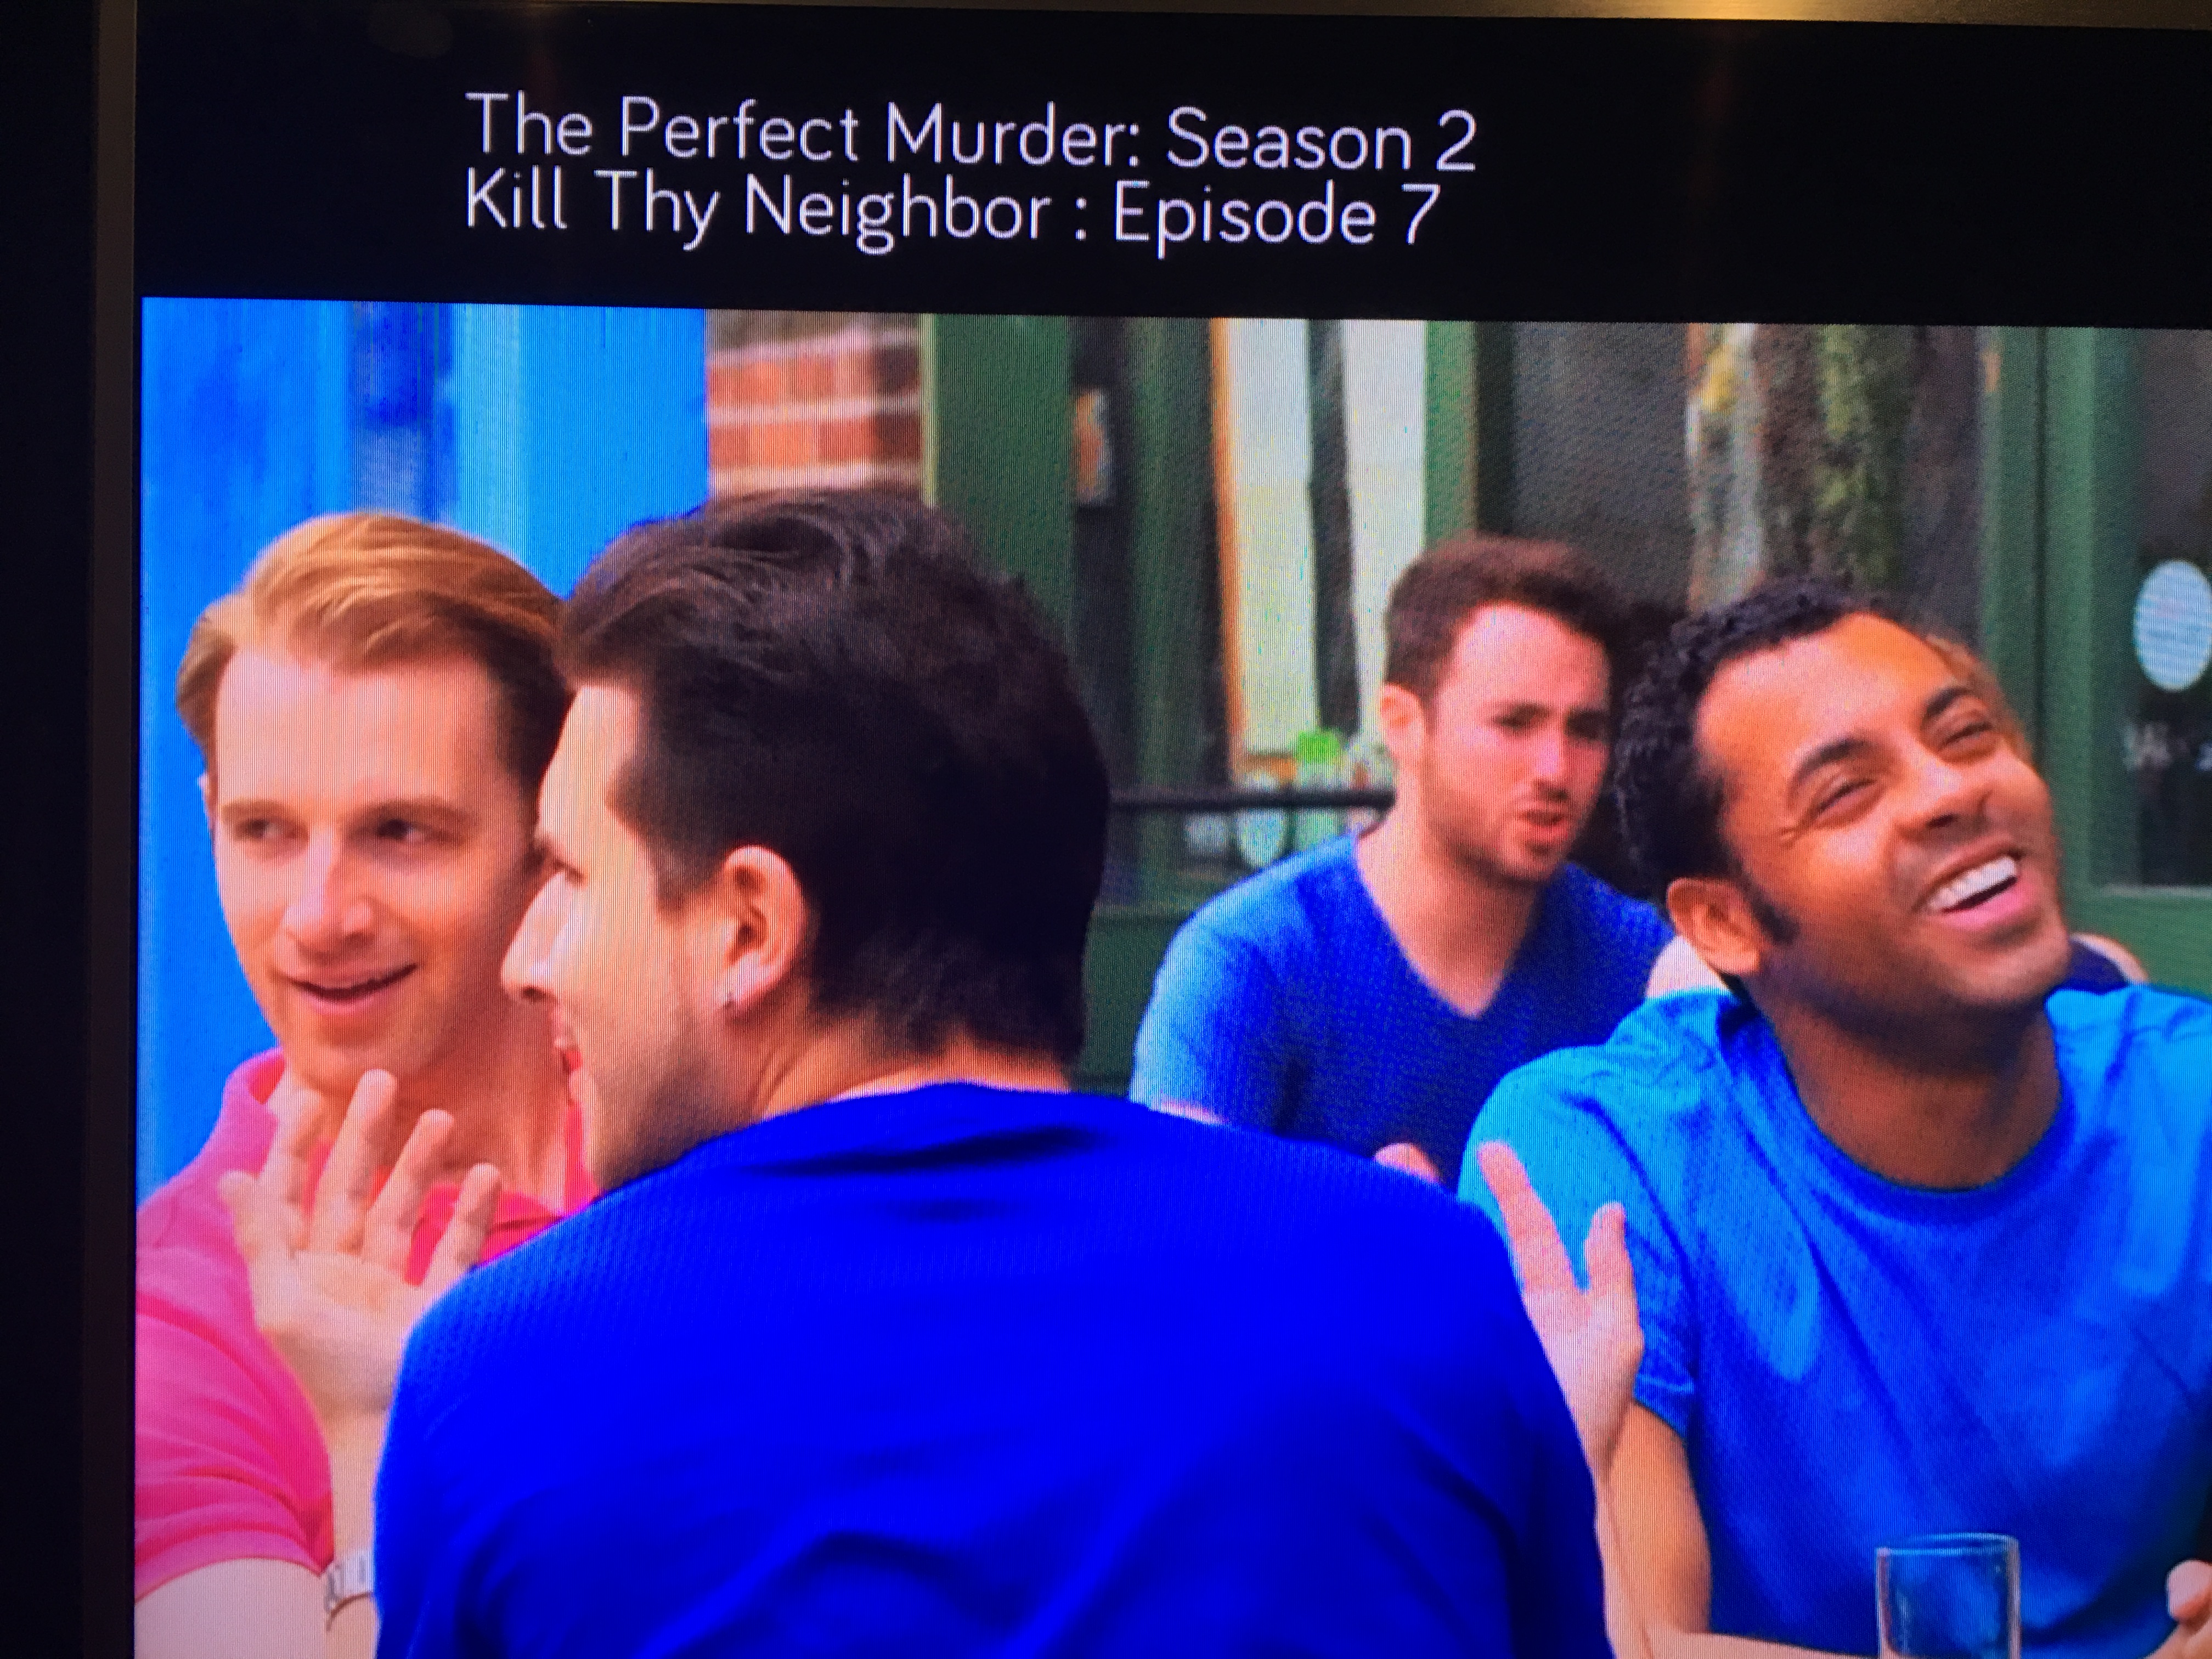 The perfect murder season 2 the Karen Gregory stir David's friend #2 played by Mario Tarquinio